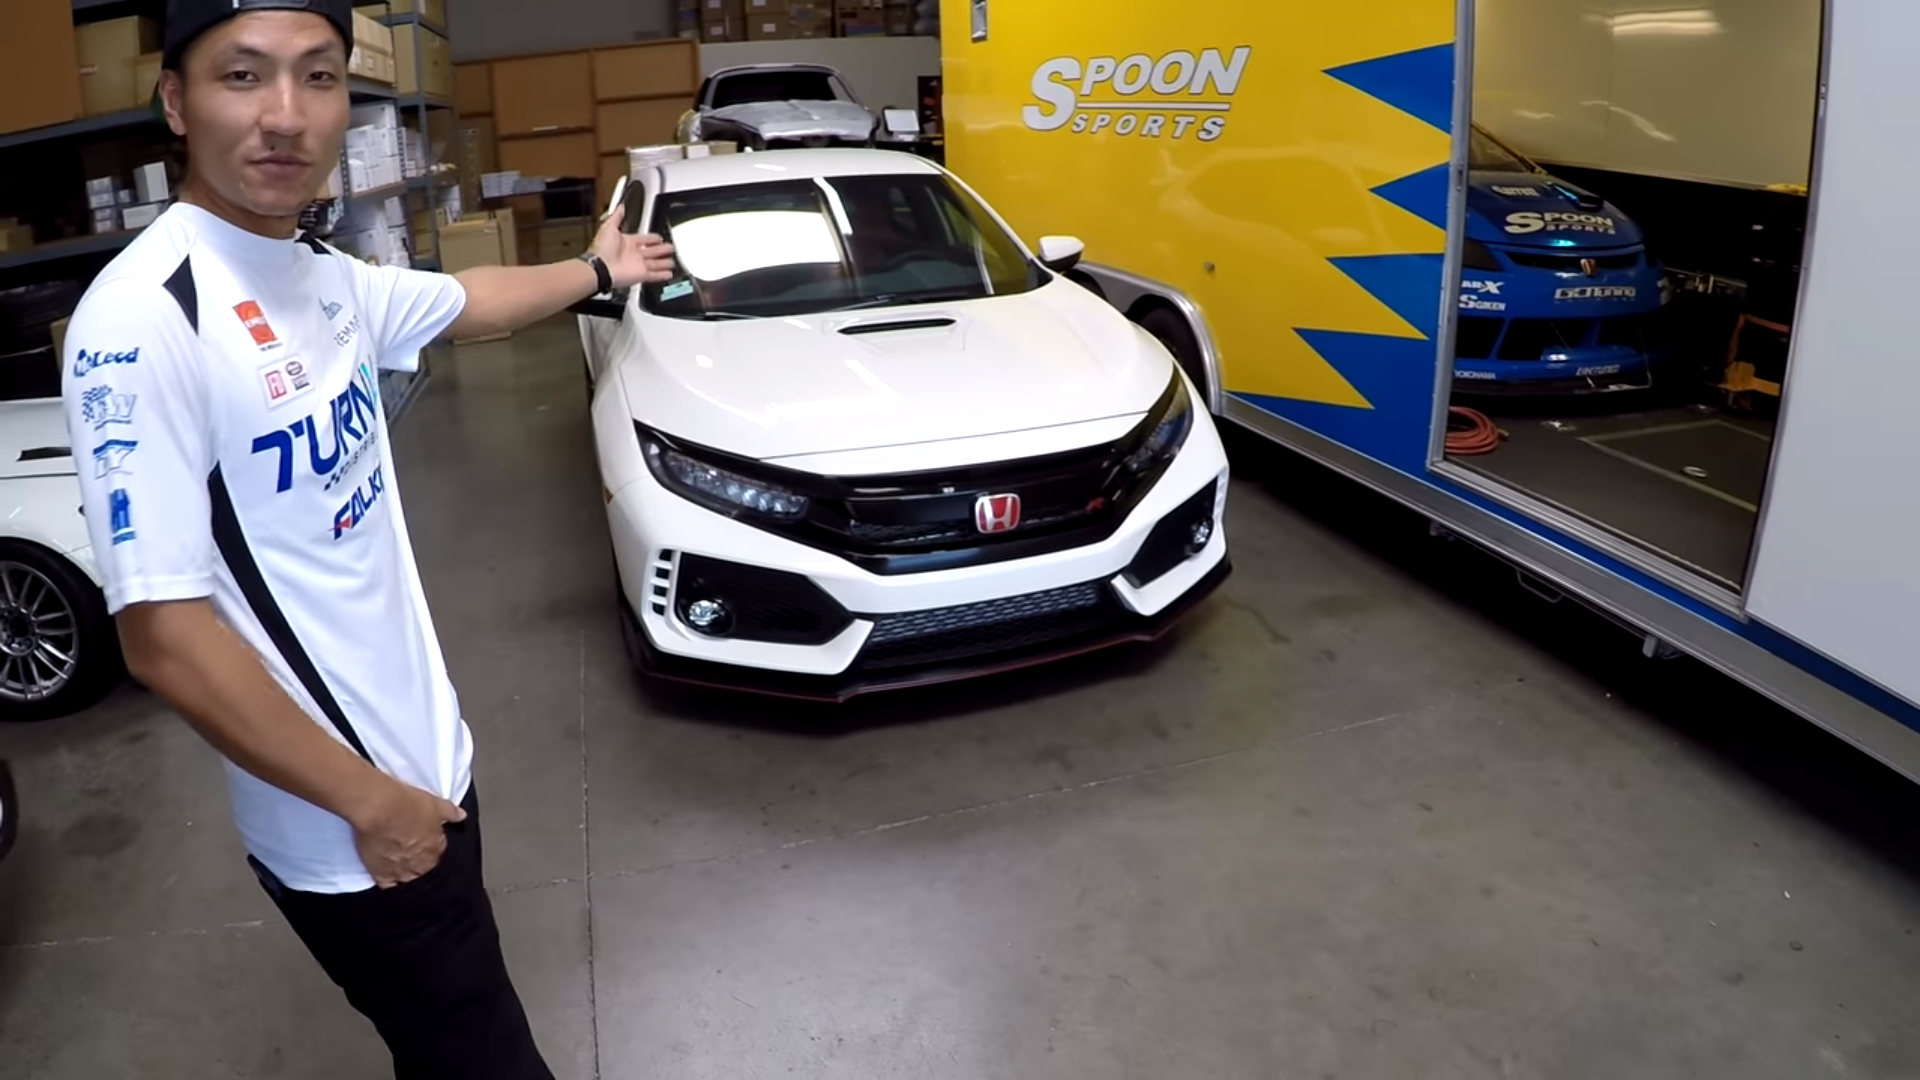 A True Honda Expert’s Take on the New Honda Civic Type R